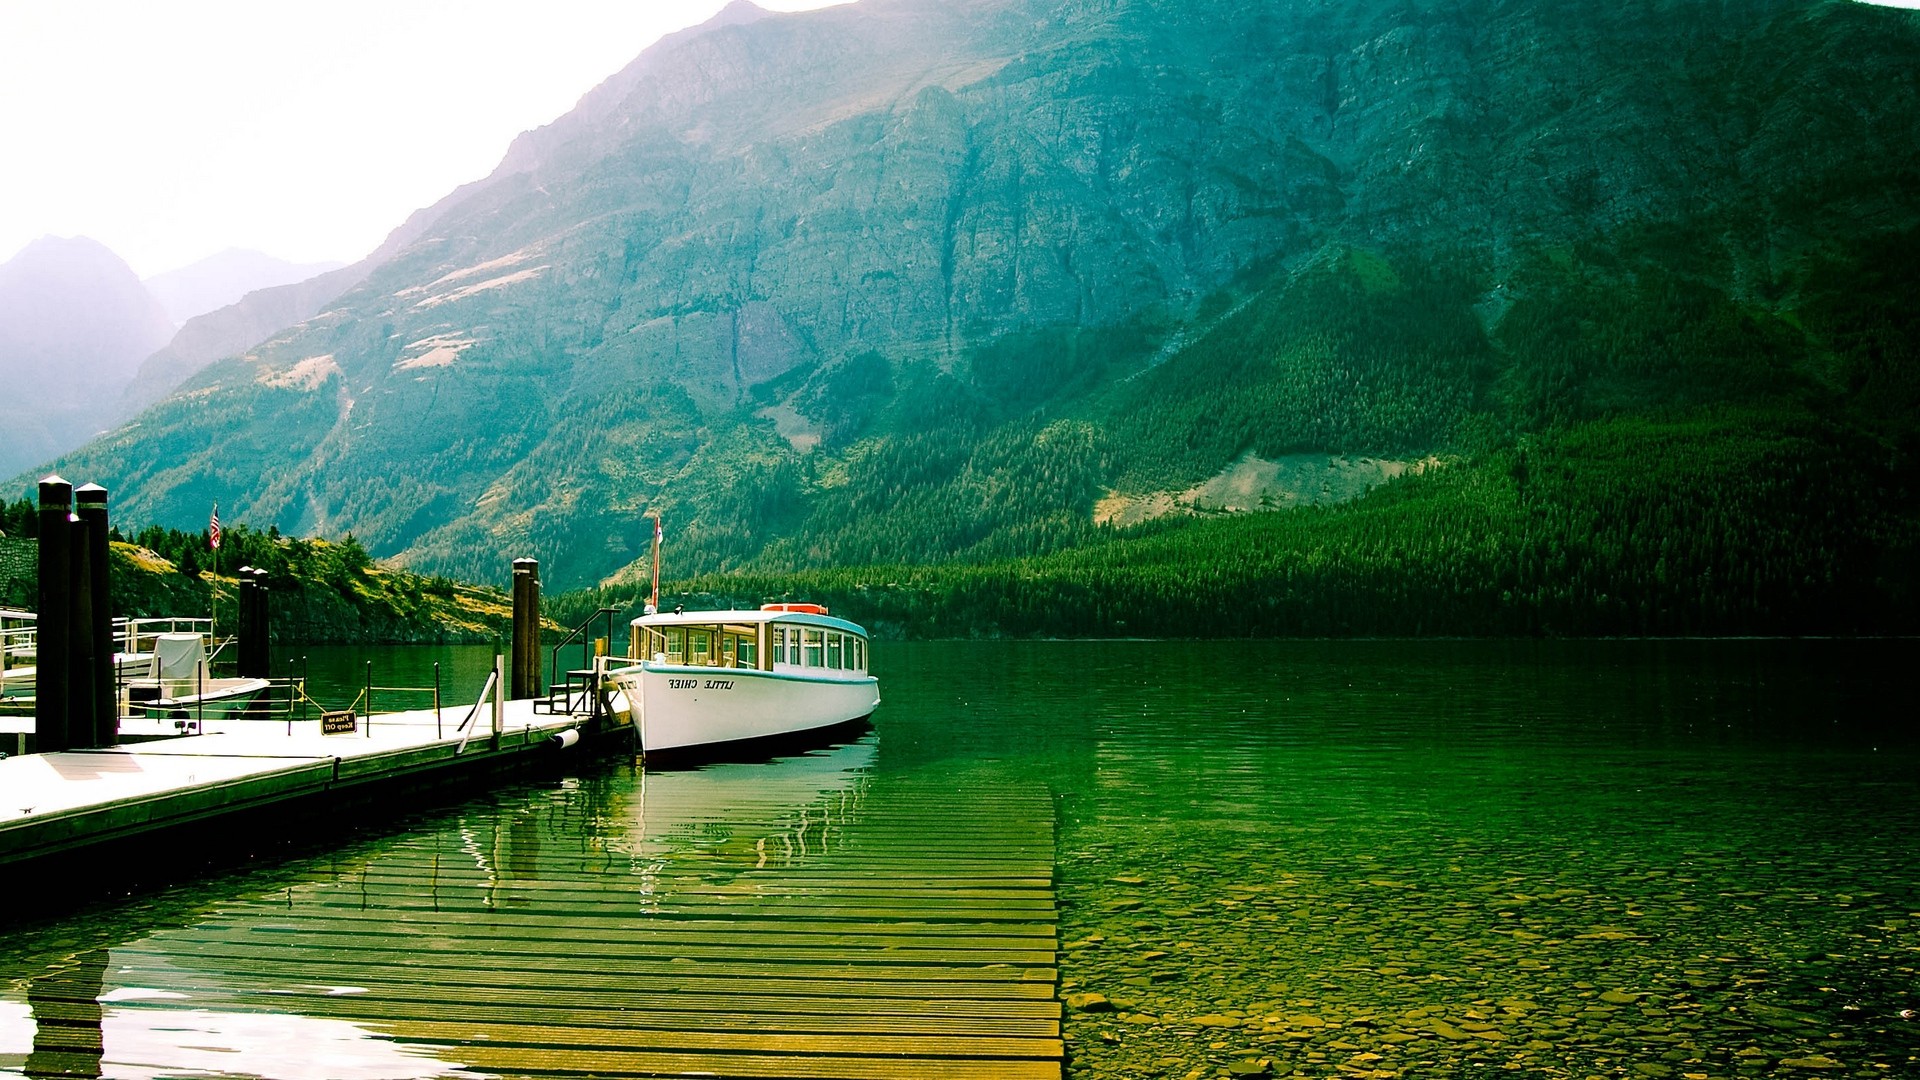 1920x1080 wallpapers: lake, mountains, bottom, transparent, pleasure, boat (image)